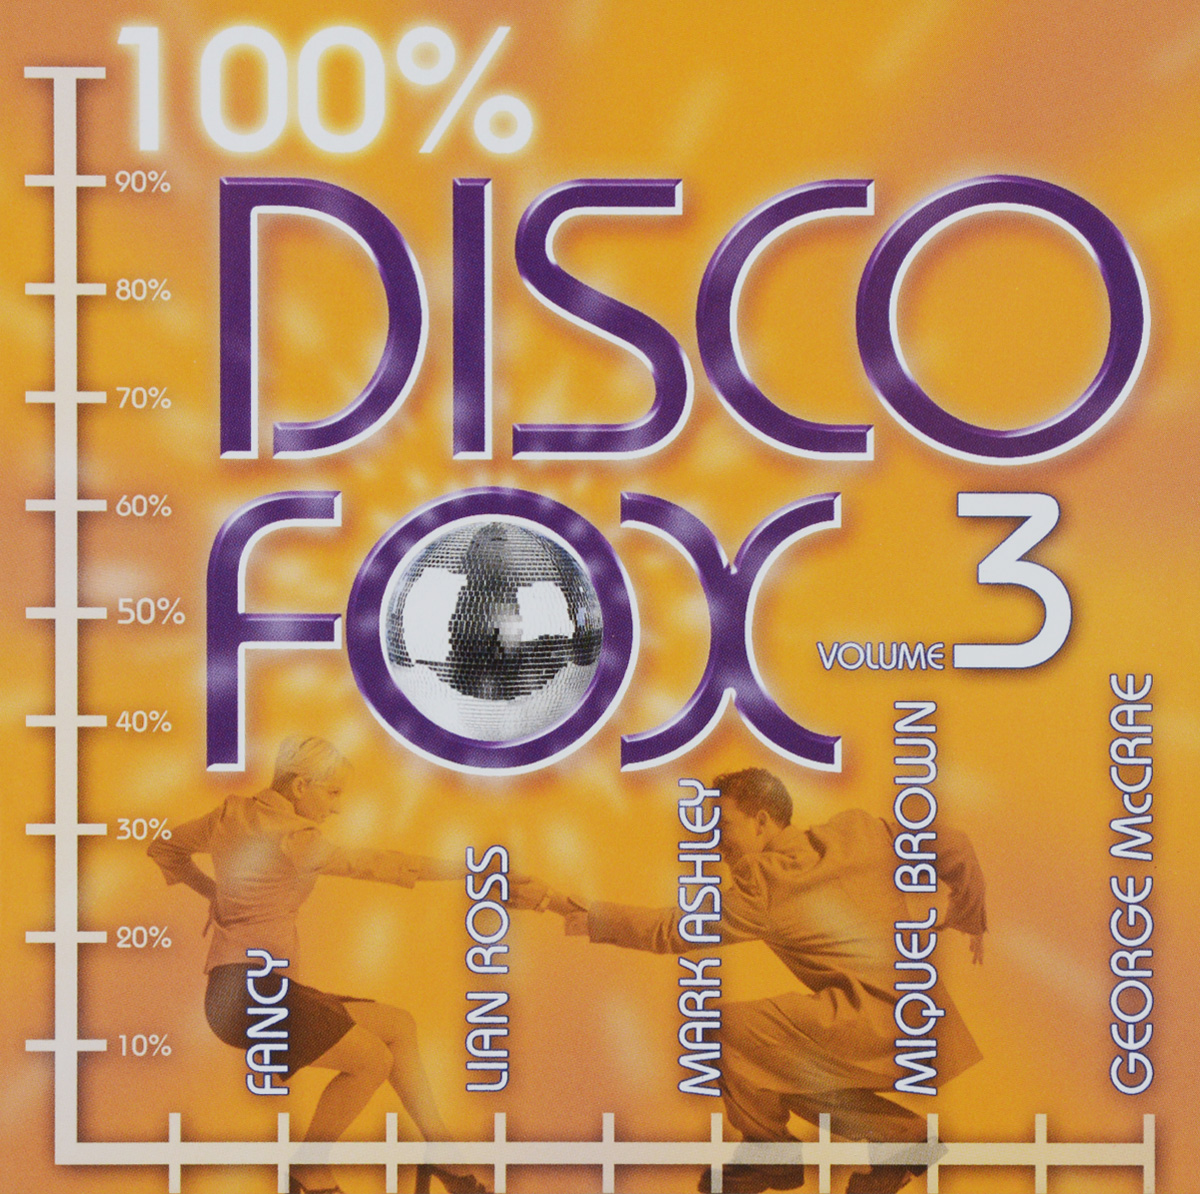 Gala Disco Fox 100% - Vol. 02. Disco Fox 80 Volume 7 album Cover. Disco Fox 80 Volume 5 album Cover. Fox 100